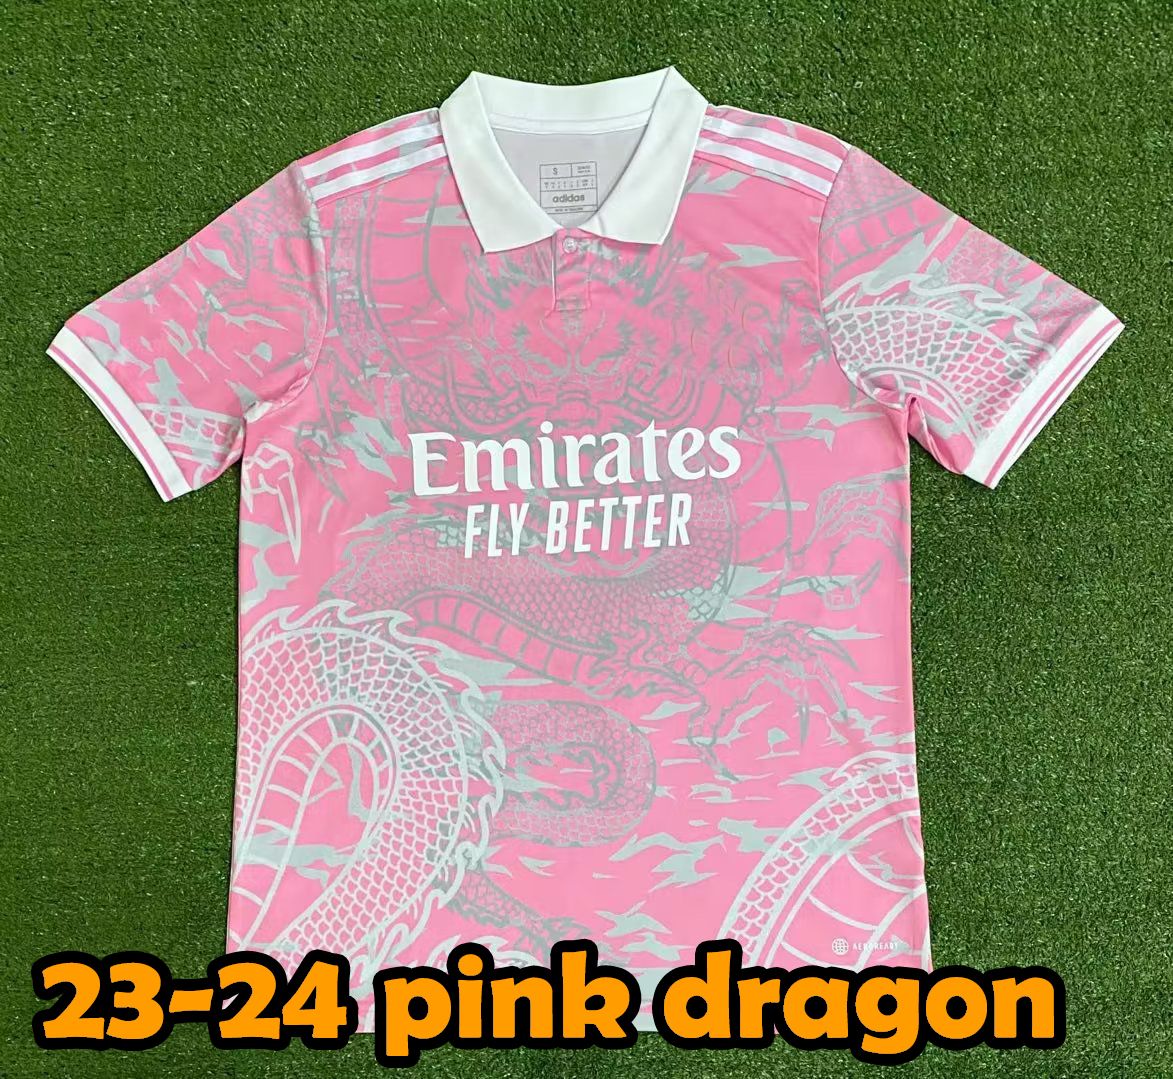 23-24 pink dragon